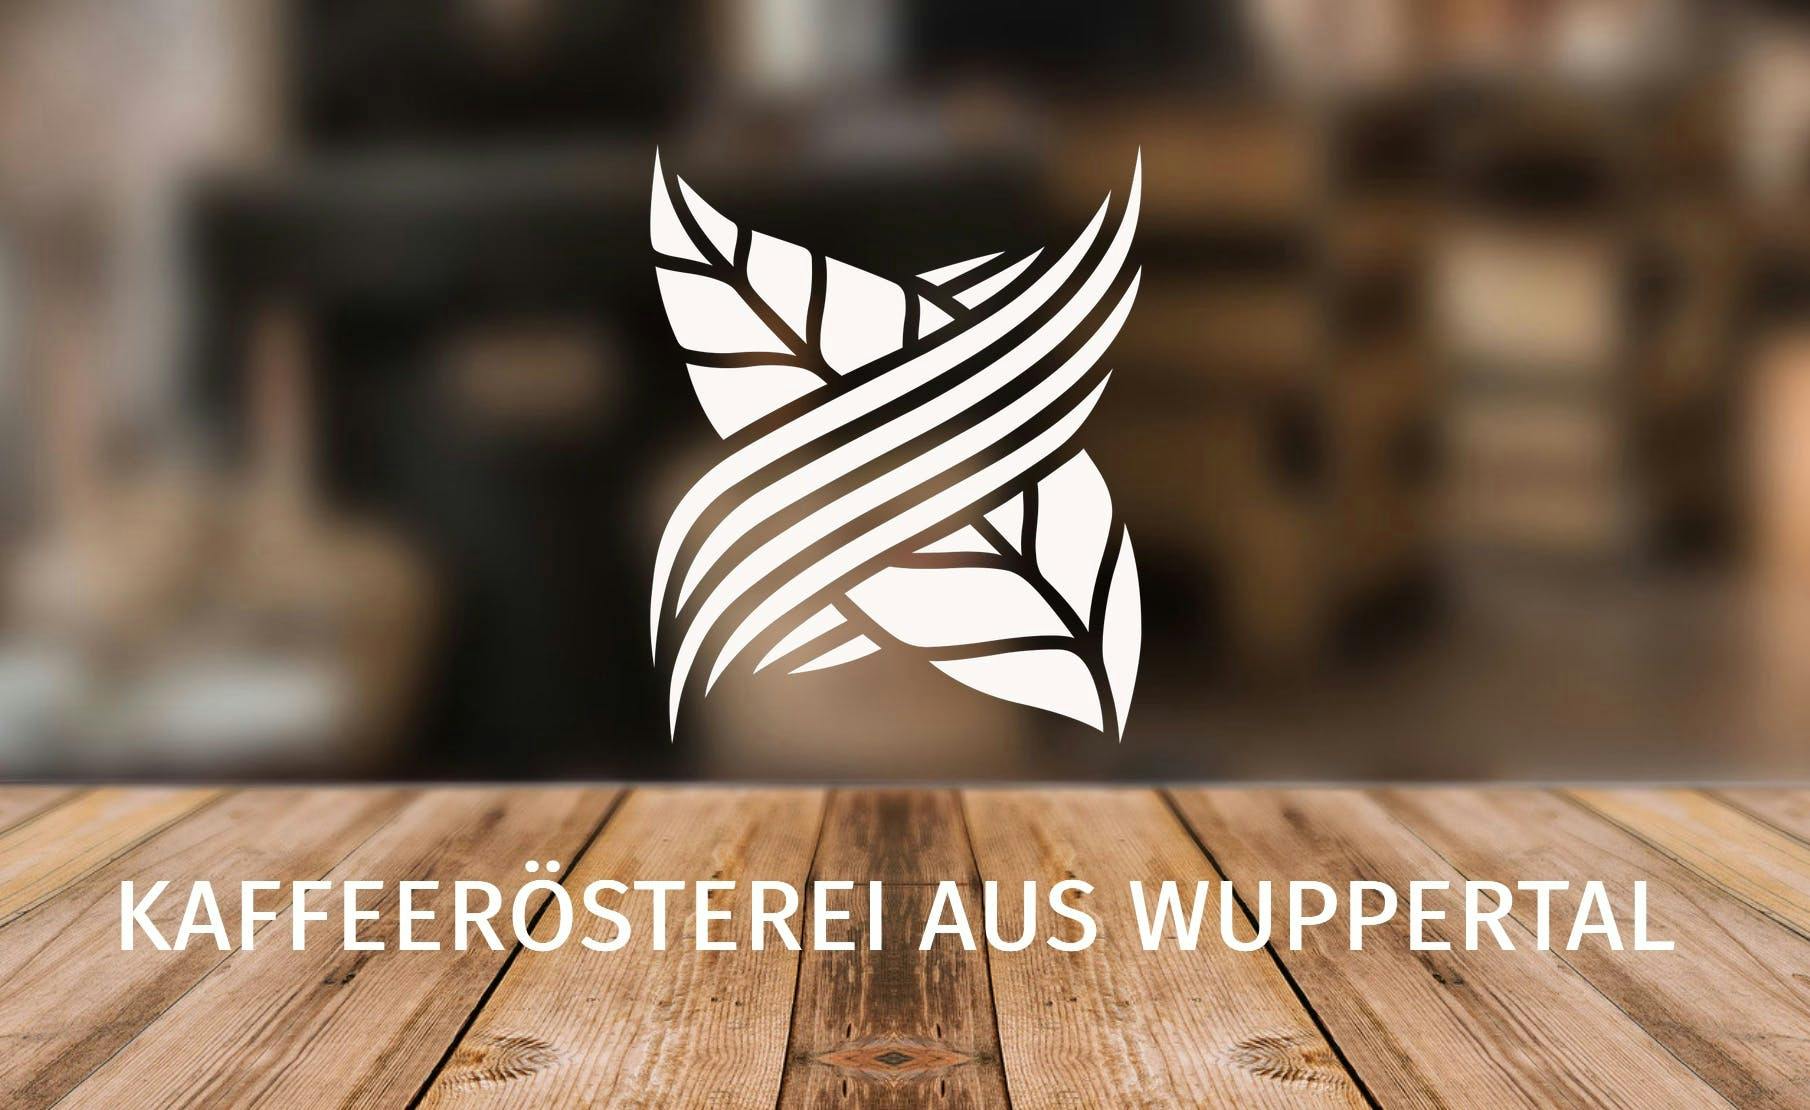 Website header of the Kivamo brand displaying the phrase "Kaffeerösterei aus Wuppertal"